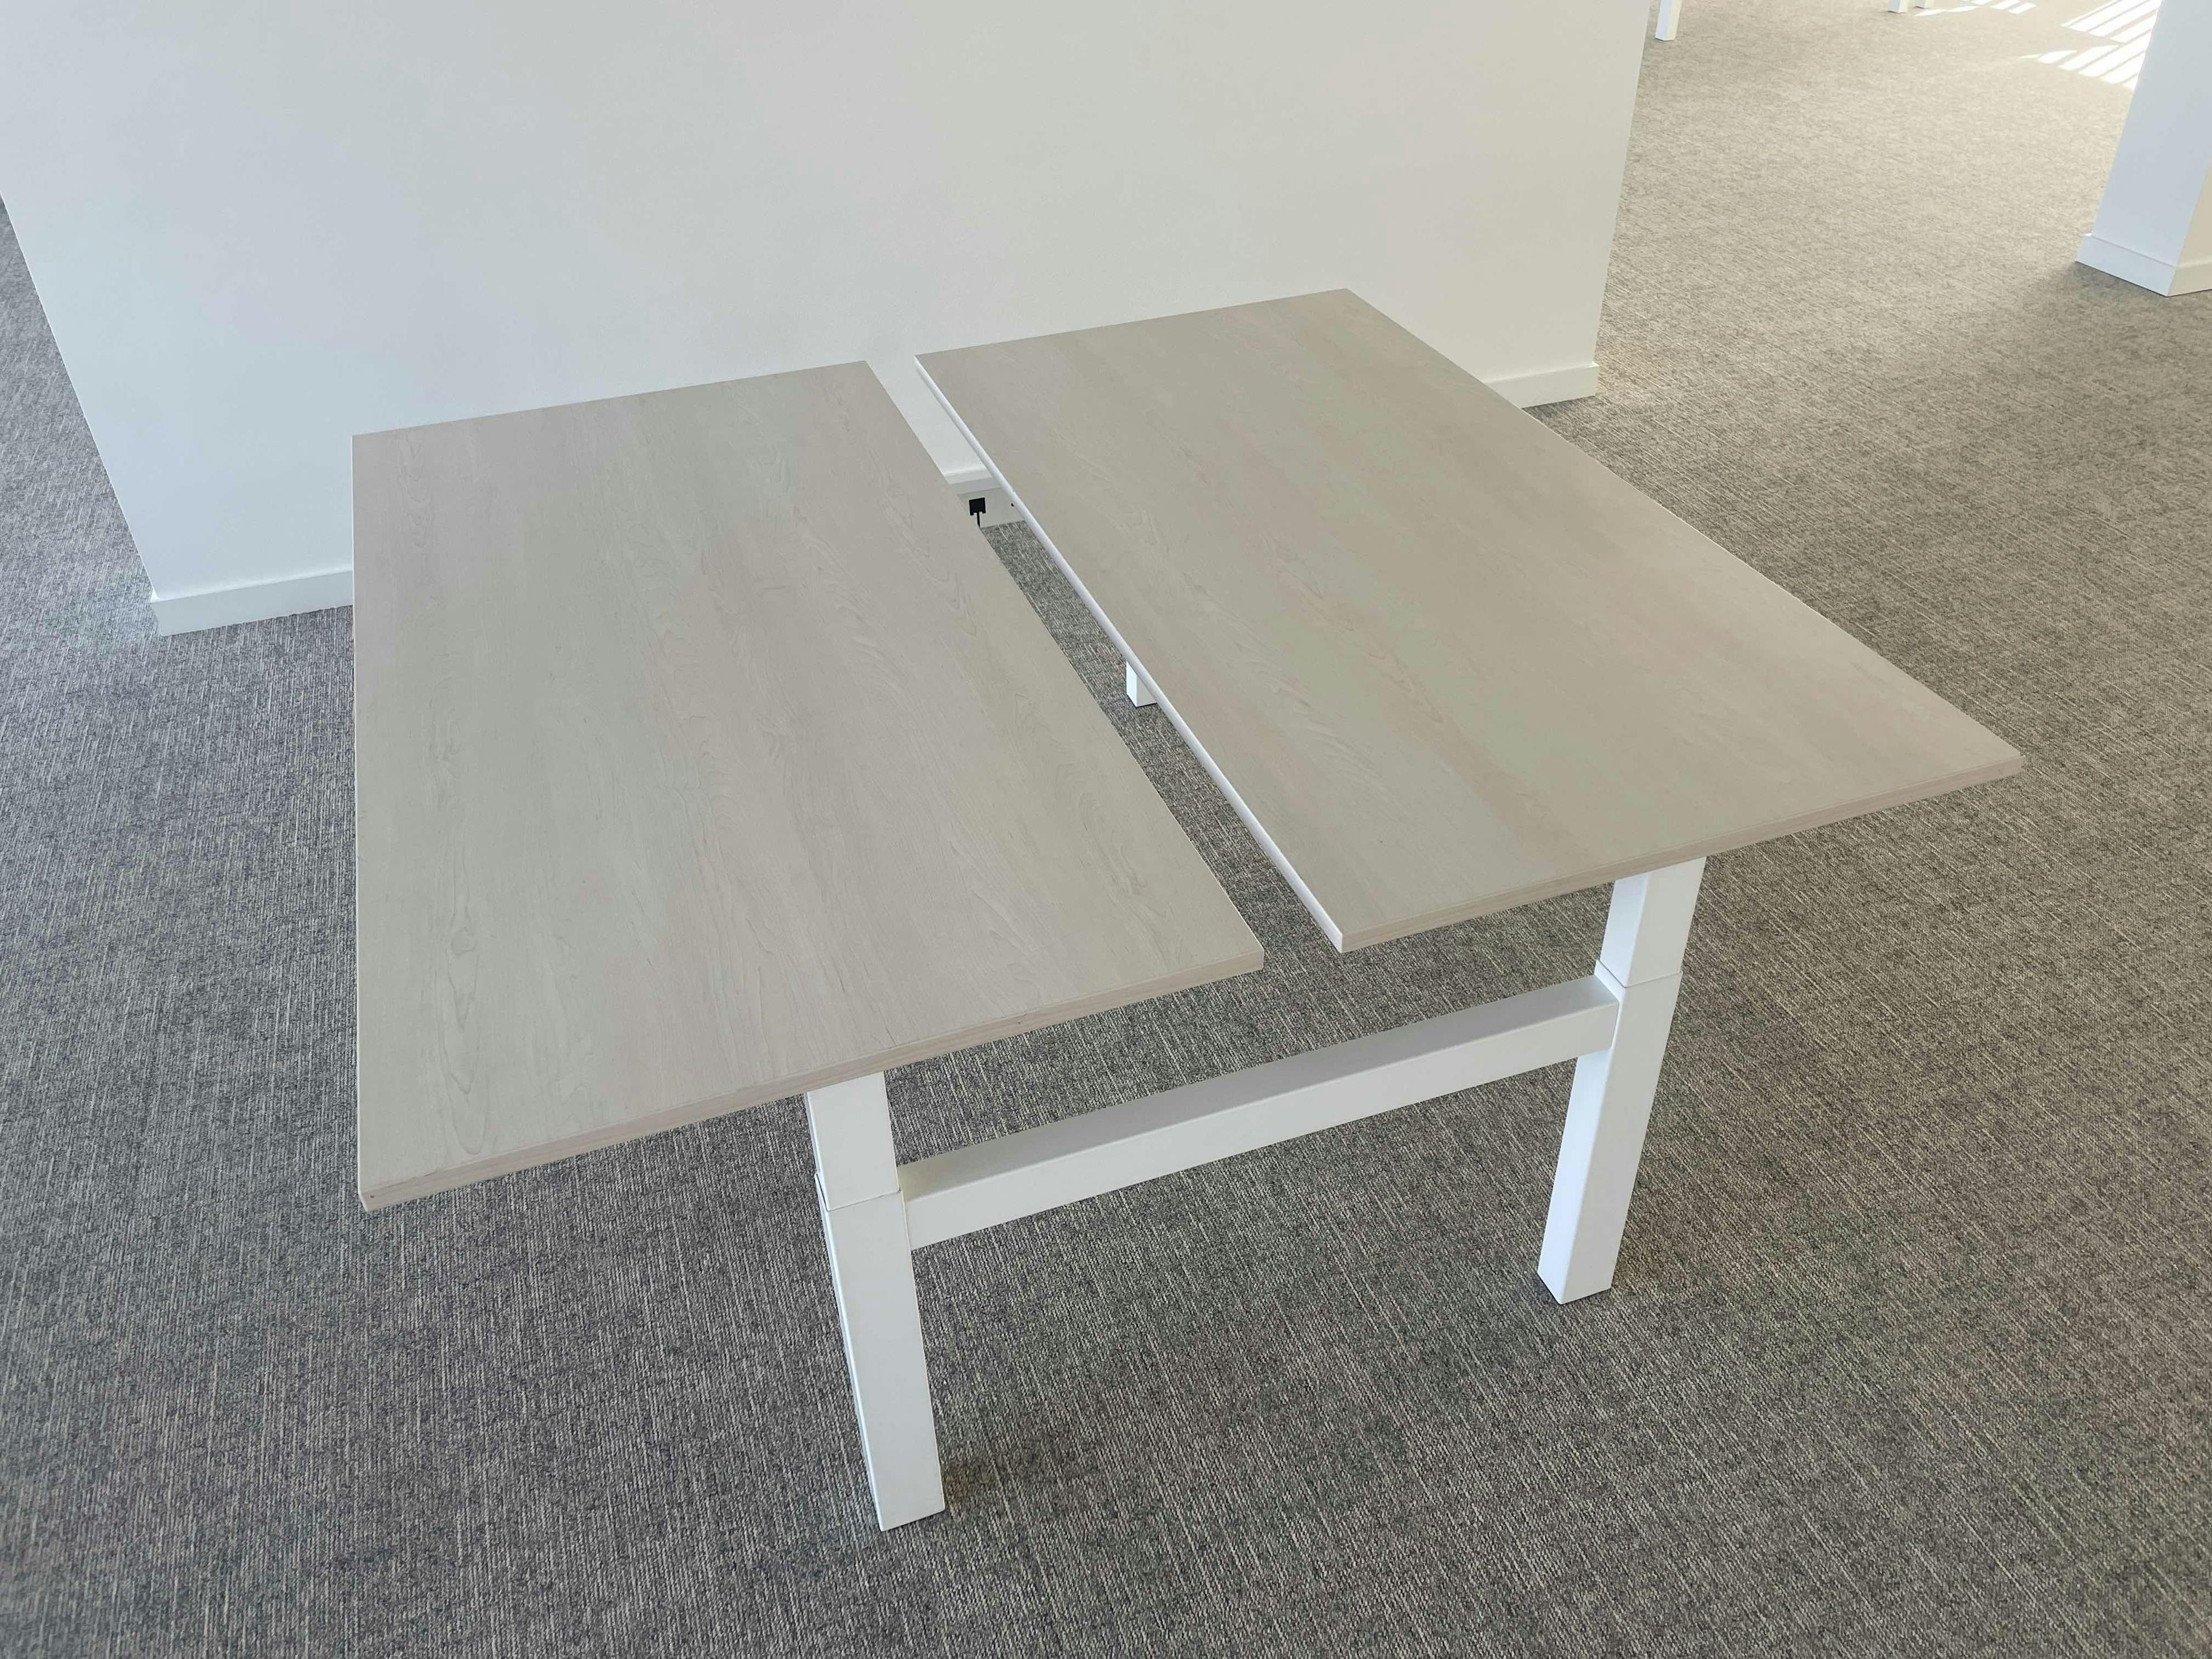 Bureau Markant duo 160x 160cm - Relieve Furniture